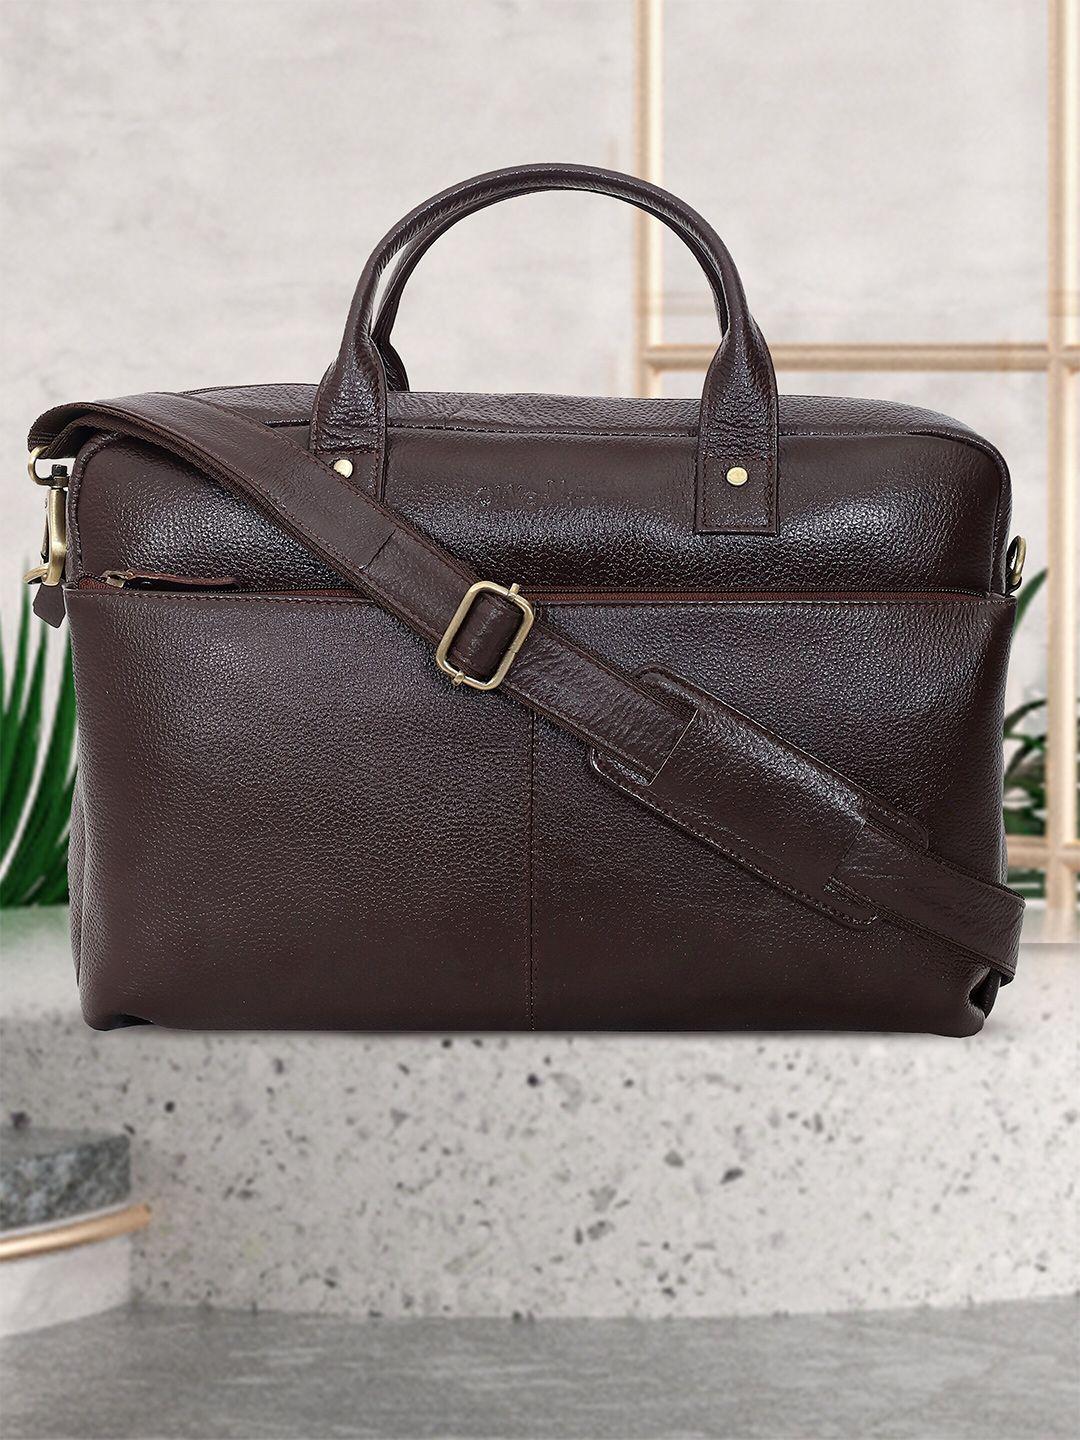 olive mist unisex brown & gold-toned textured leather laptop bag